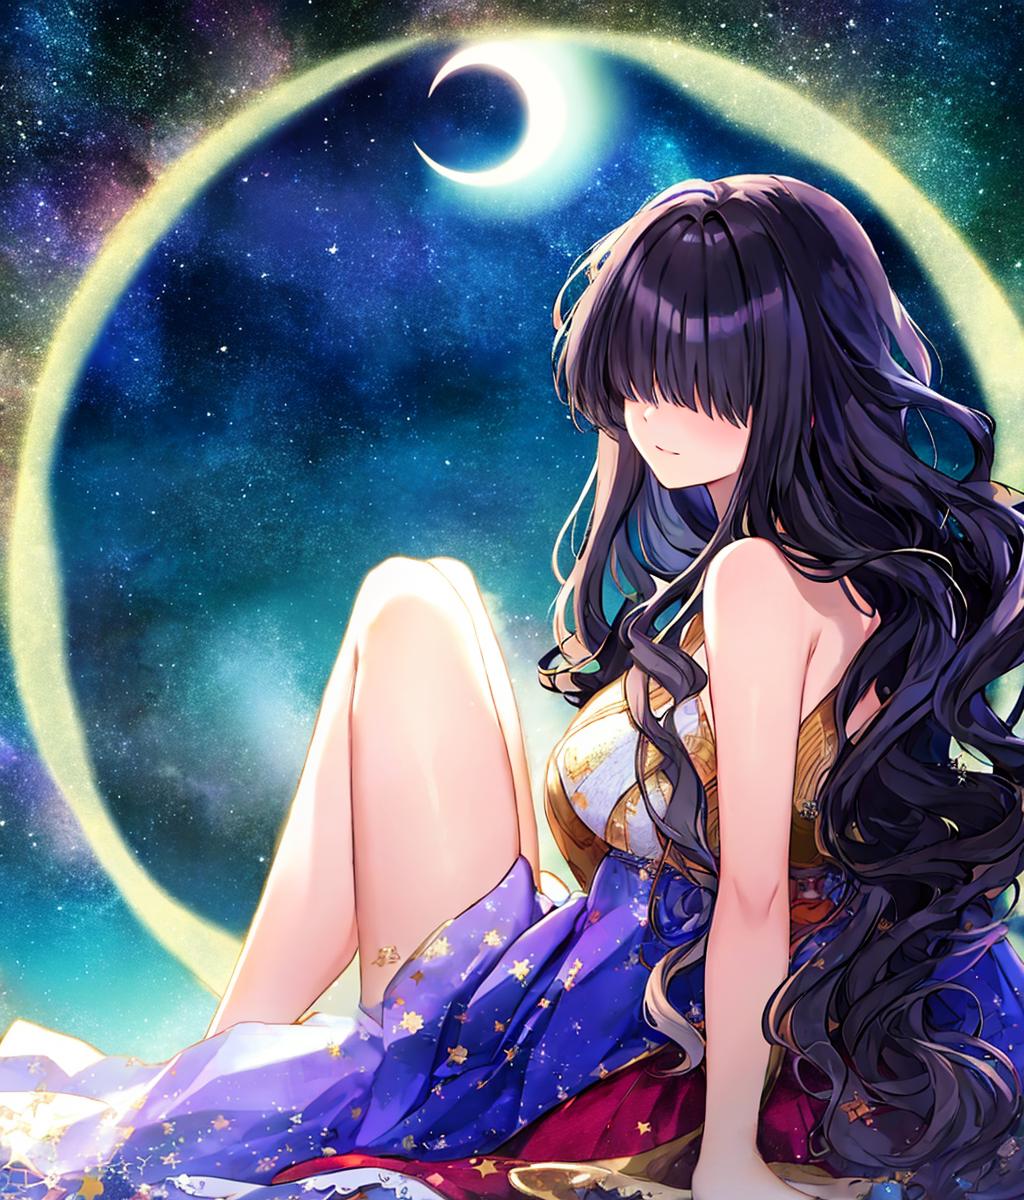 Moon Crescent - Anime Manga World Wallpapers and Images - Desktop Nexus  Groups